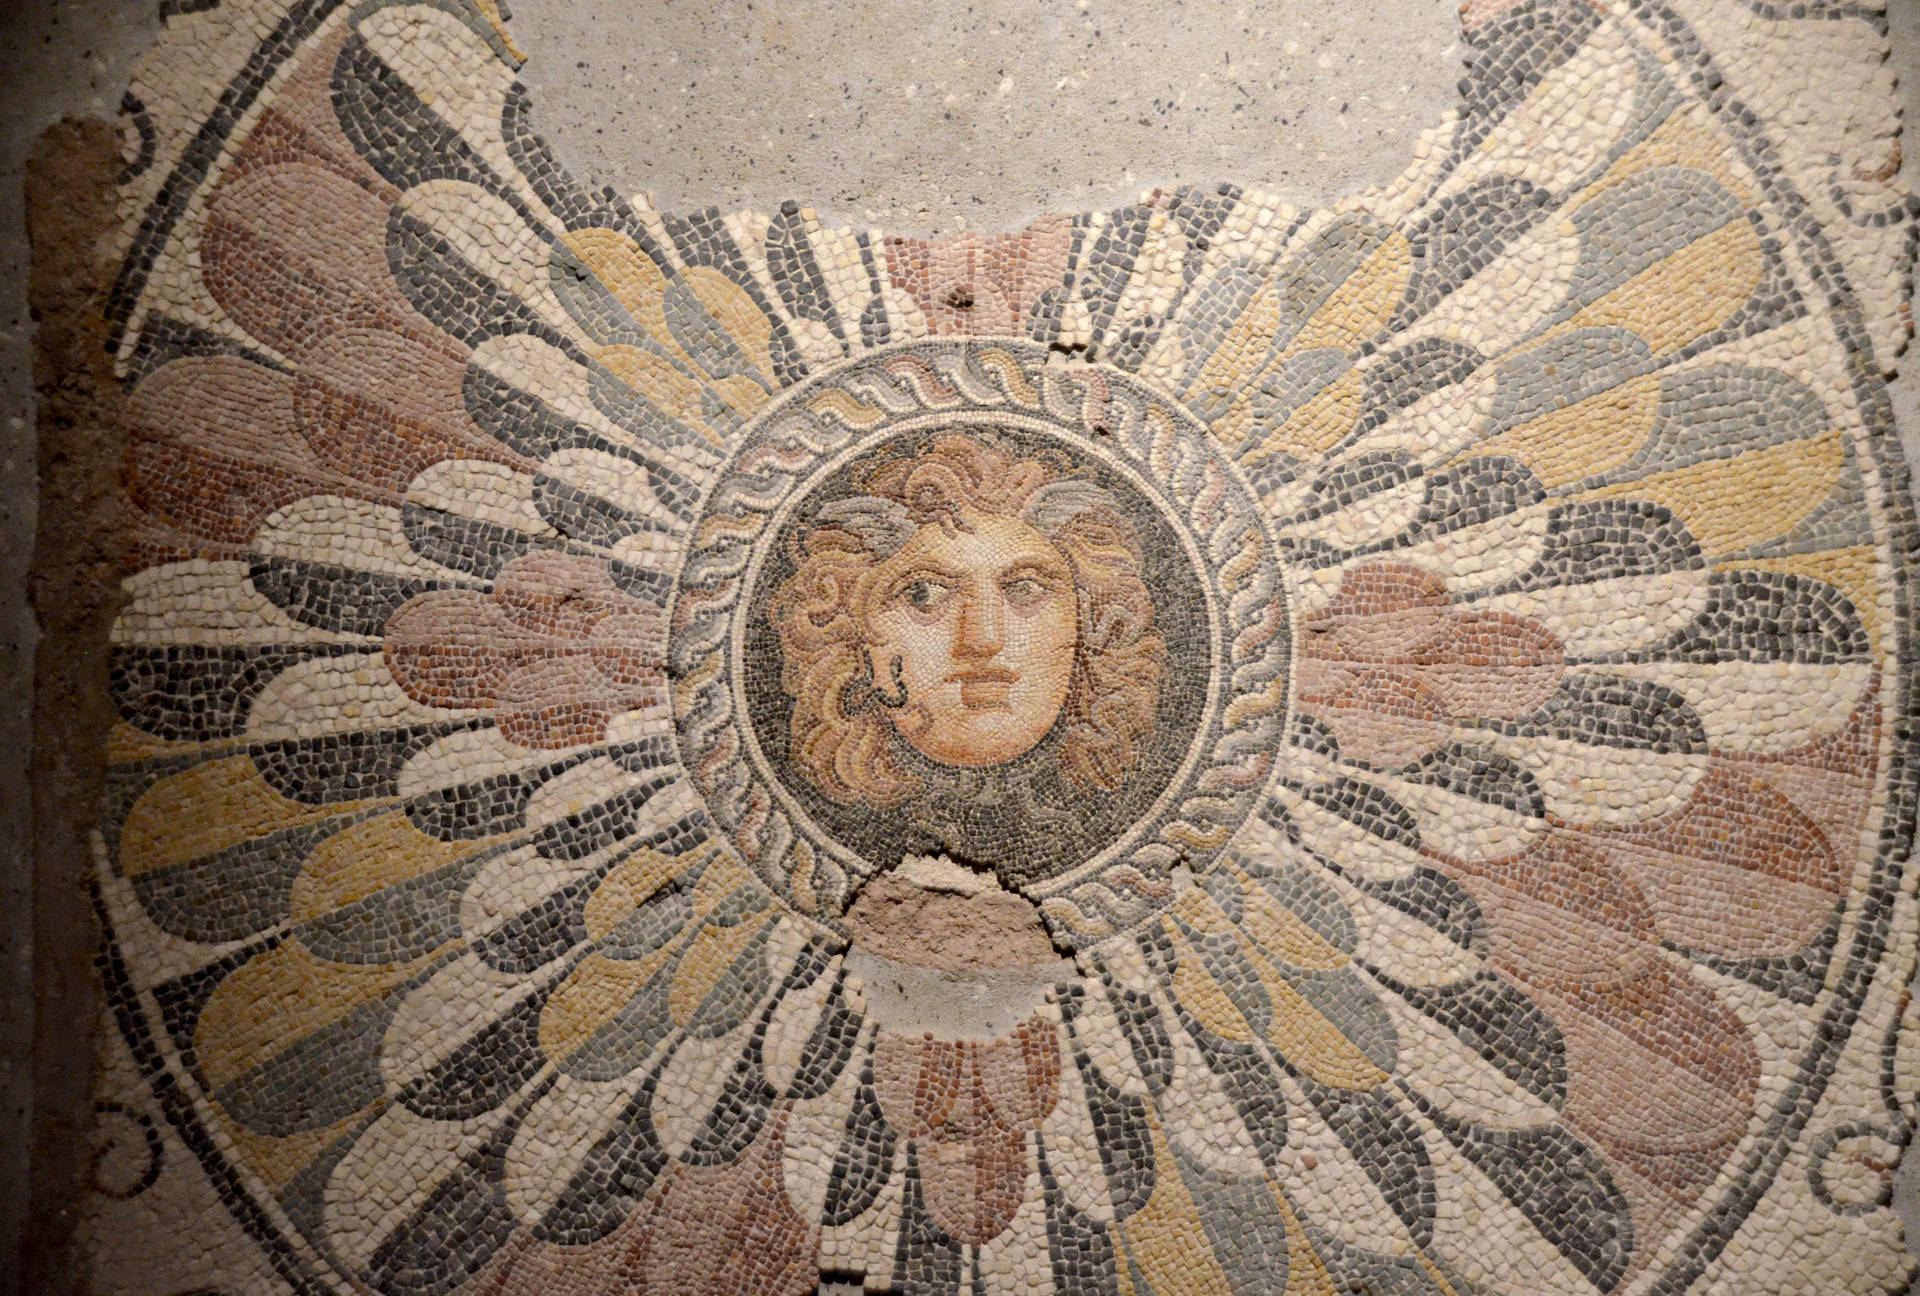 Intricate Medusa Mosaic In Alexandria